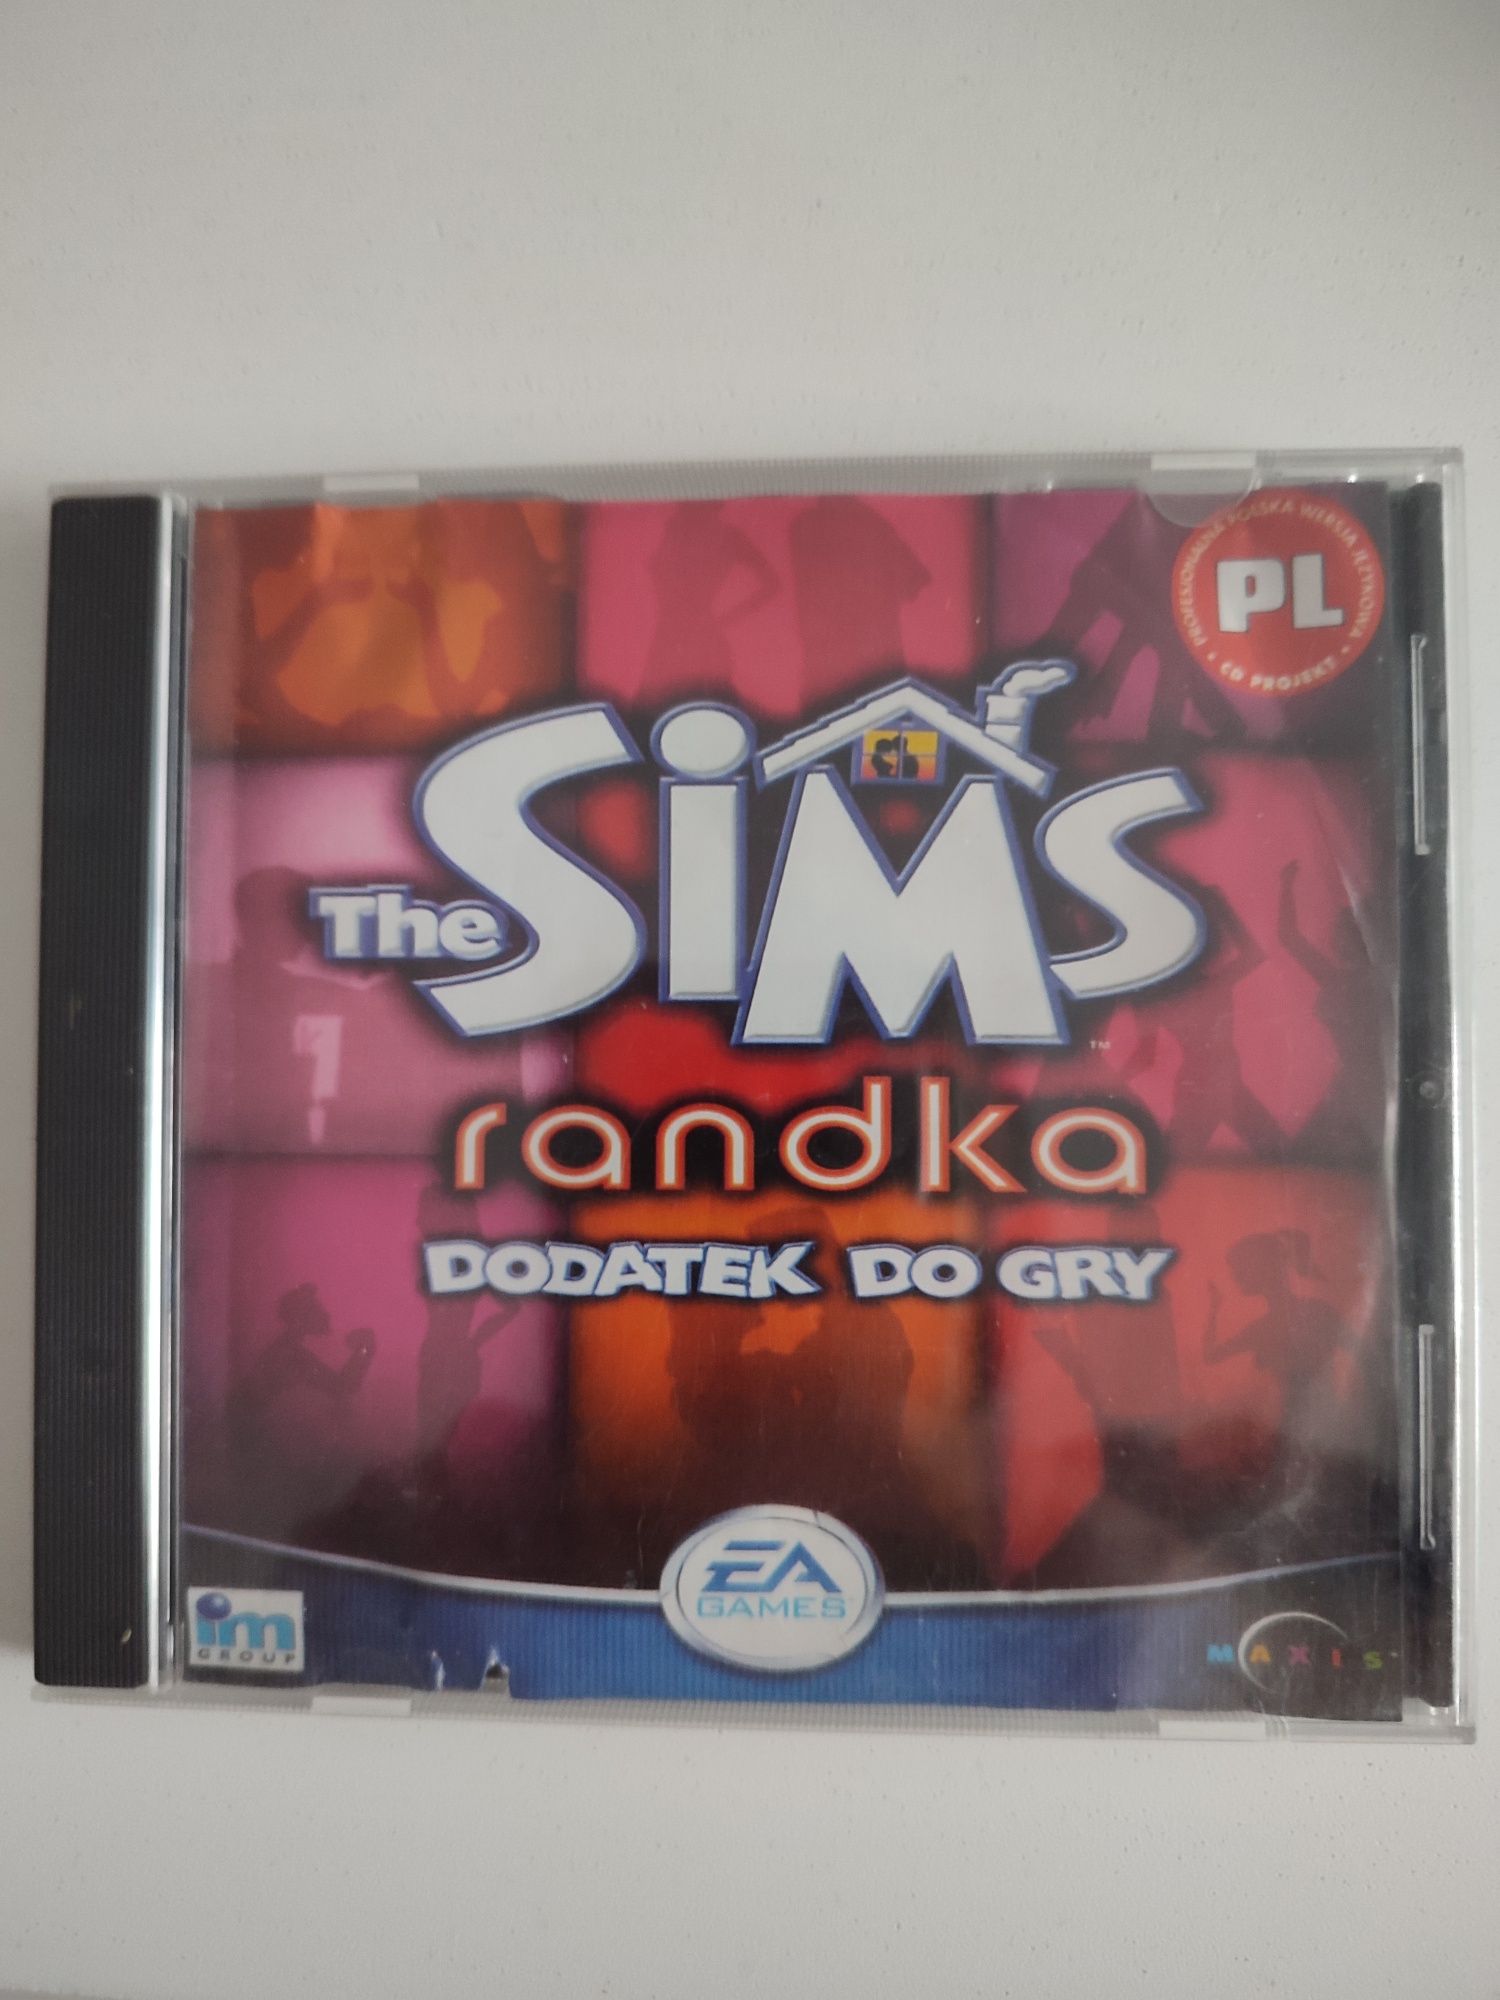 The Sims randka pc